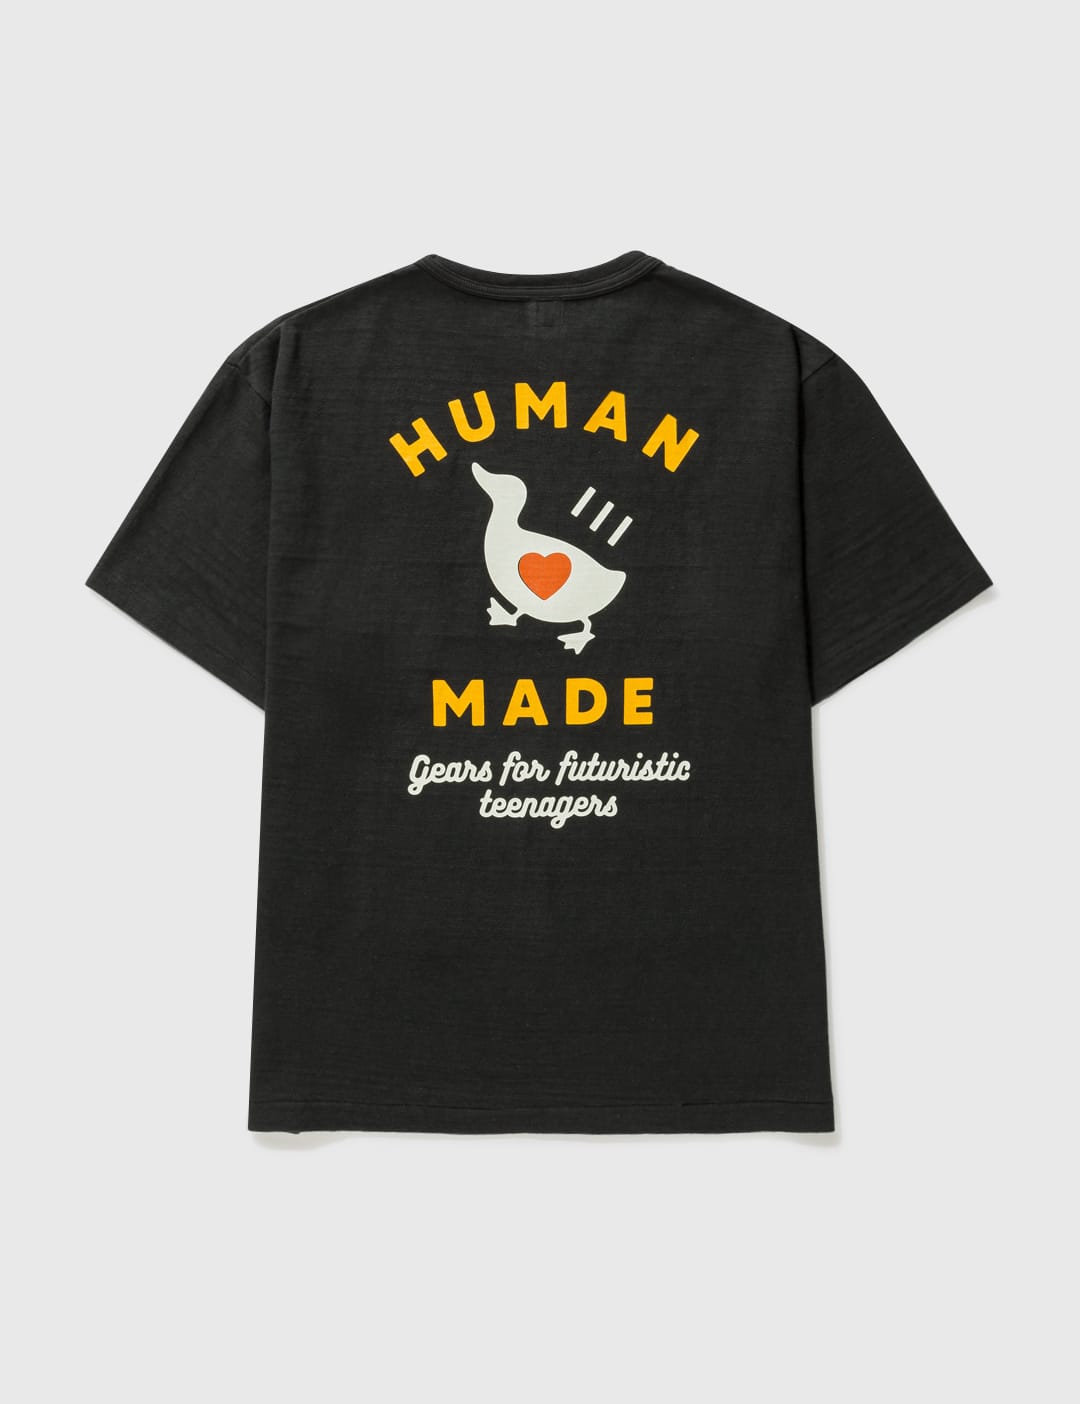 Sacai - KAWS Embroidery T-shirt | HBX - Globally Curated Fashion 